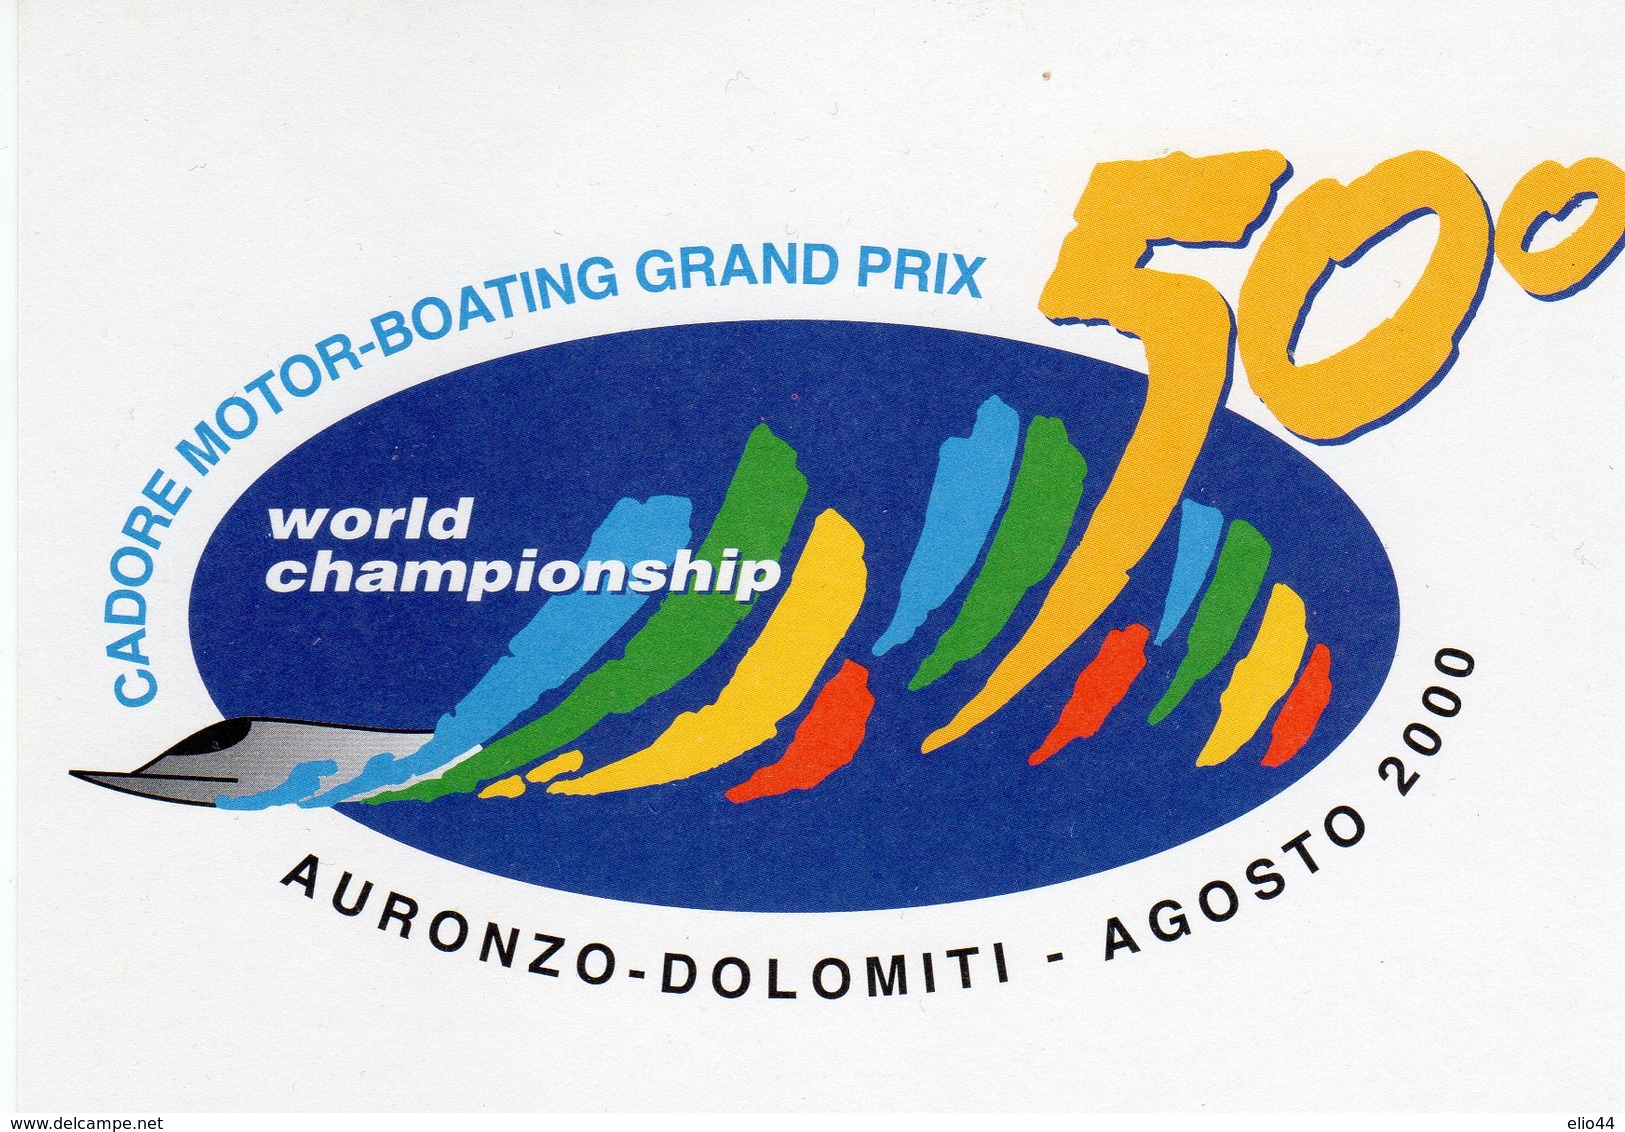 Auronzo (BL) 2000 - 50° Cadore Motor-Boating Grand Prix - - Water-skiing